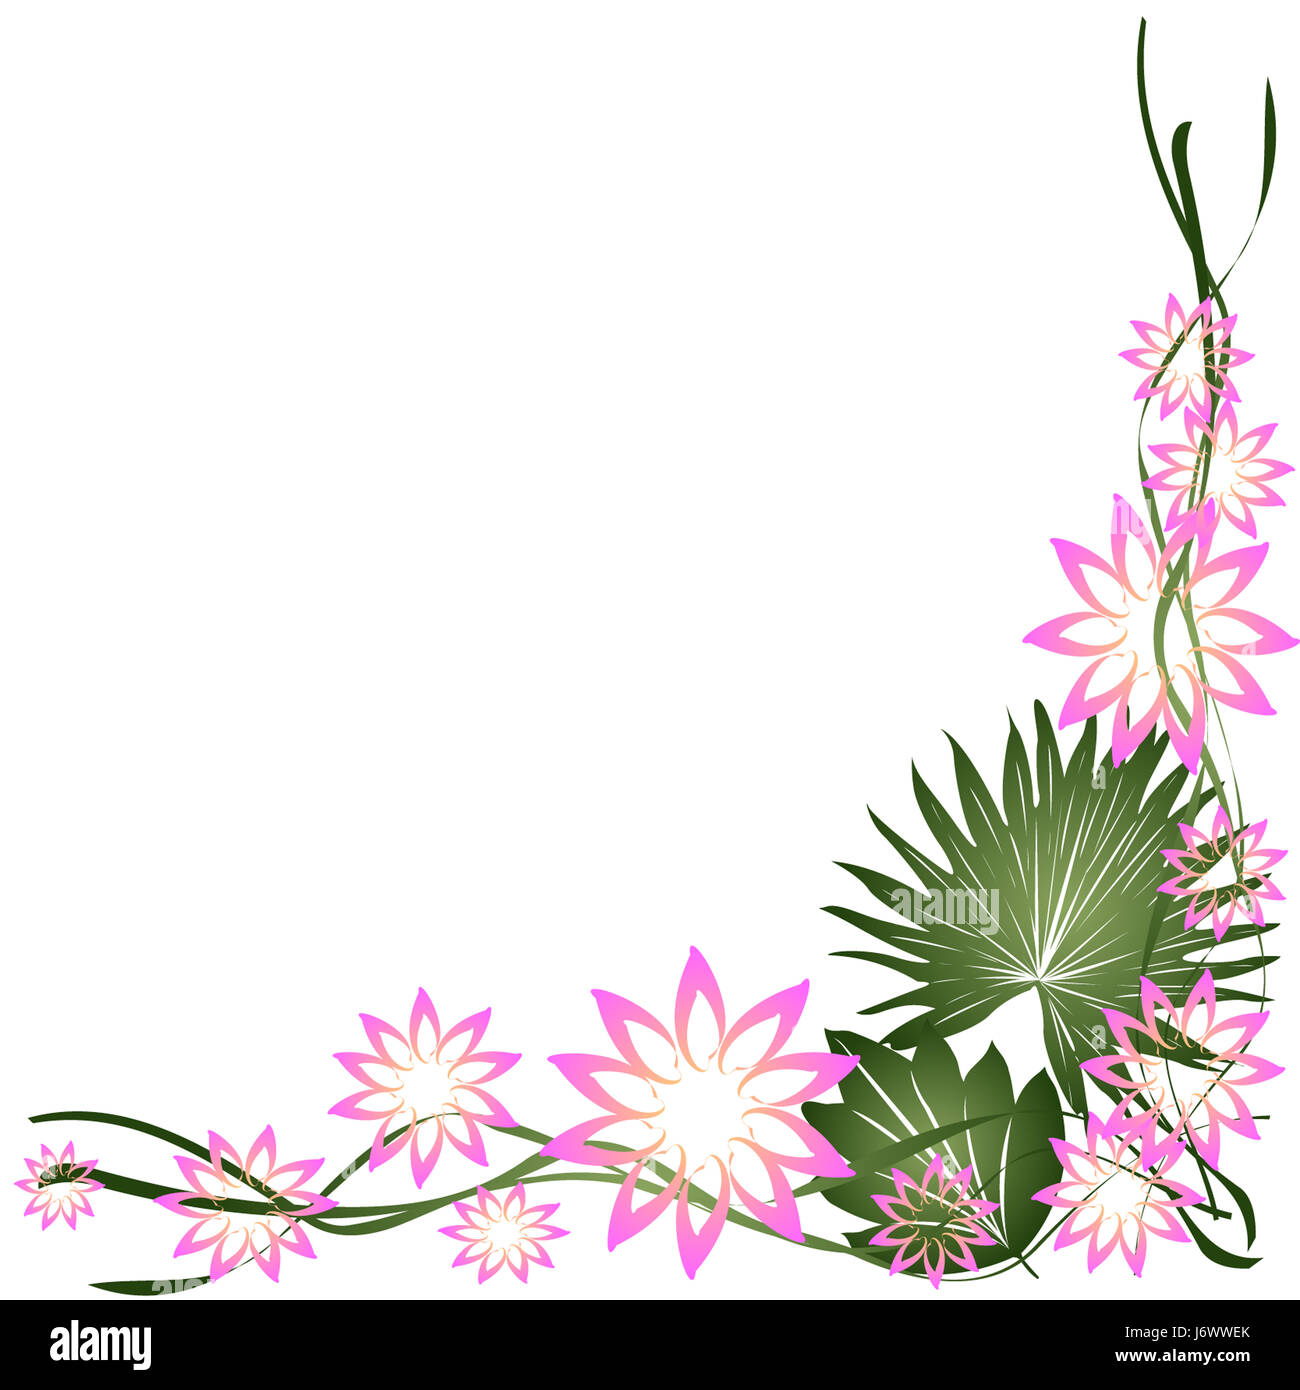 https://c8.alamy.com/compes/j6wwek/planta-de-flores-decorativas-decoracion-telon-de-fondo-el-follaje-de-hojas-de-borde-floral-j6wwek.jpg